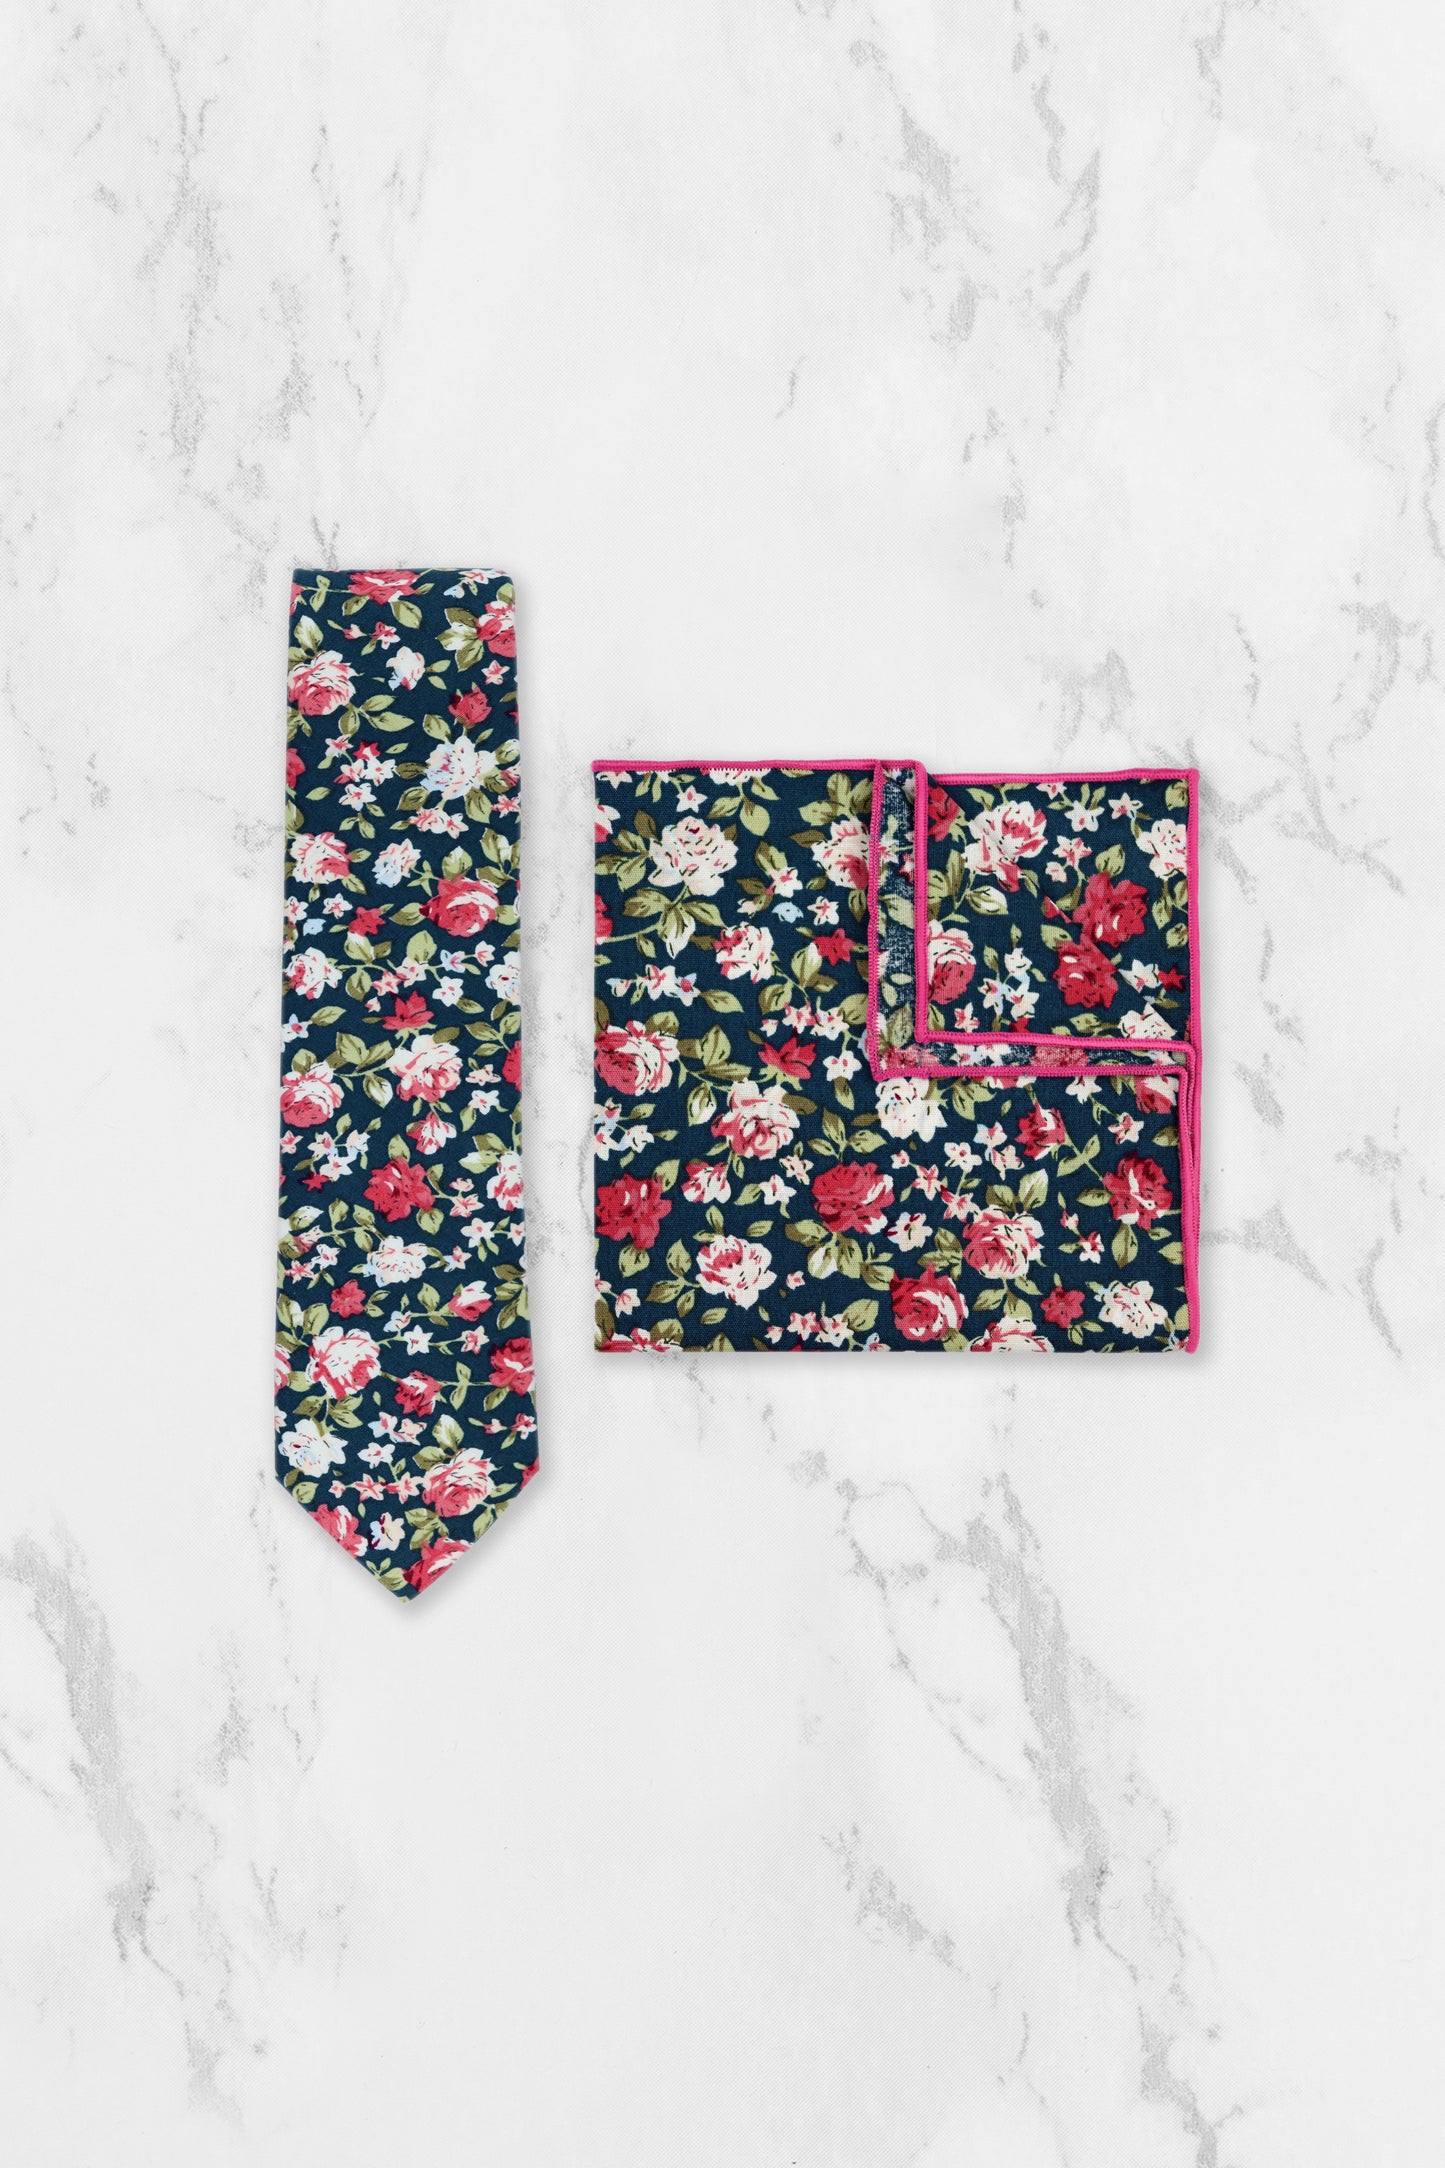 100% Cotton Floral Print Pocket Square - Green & Pink